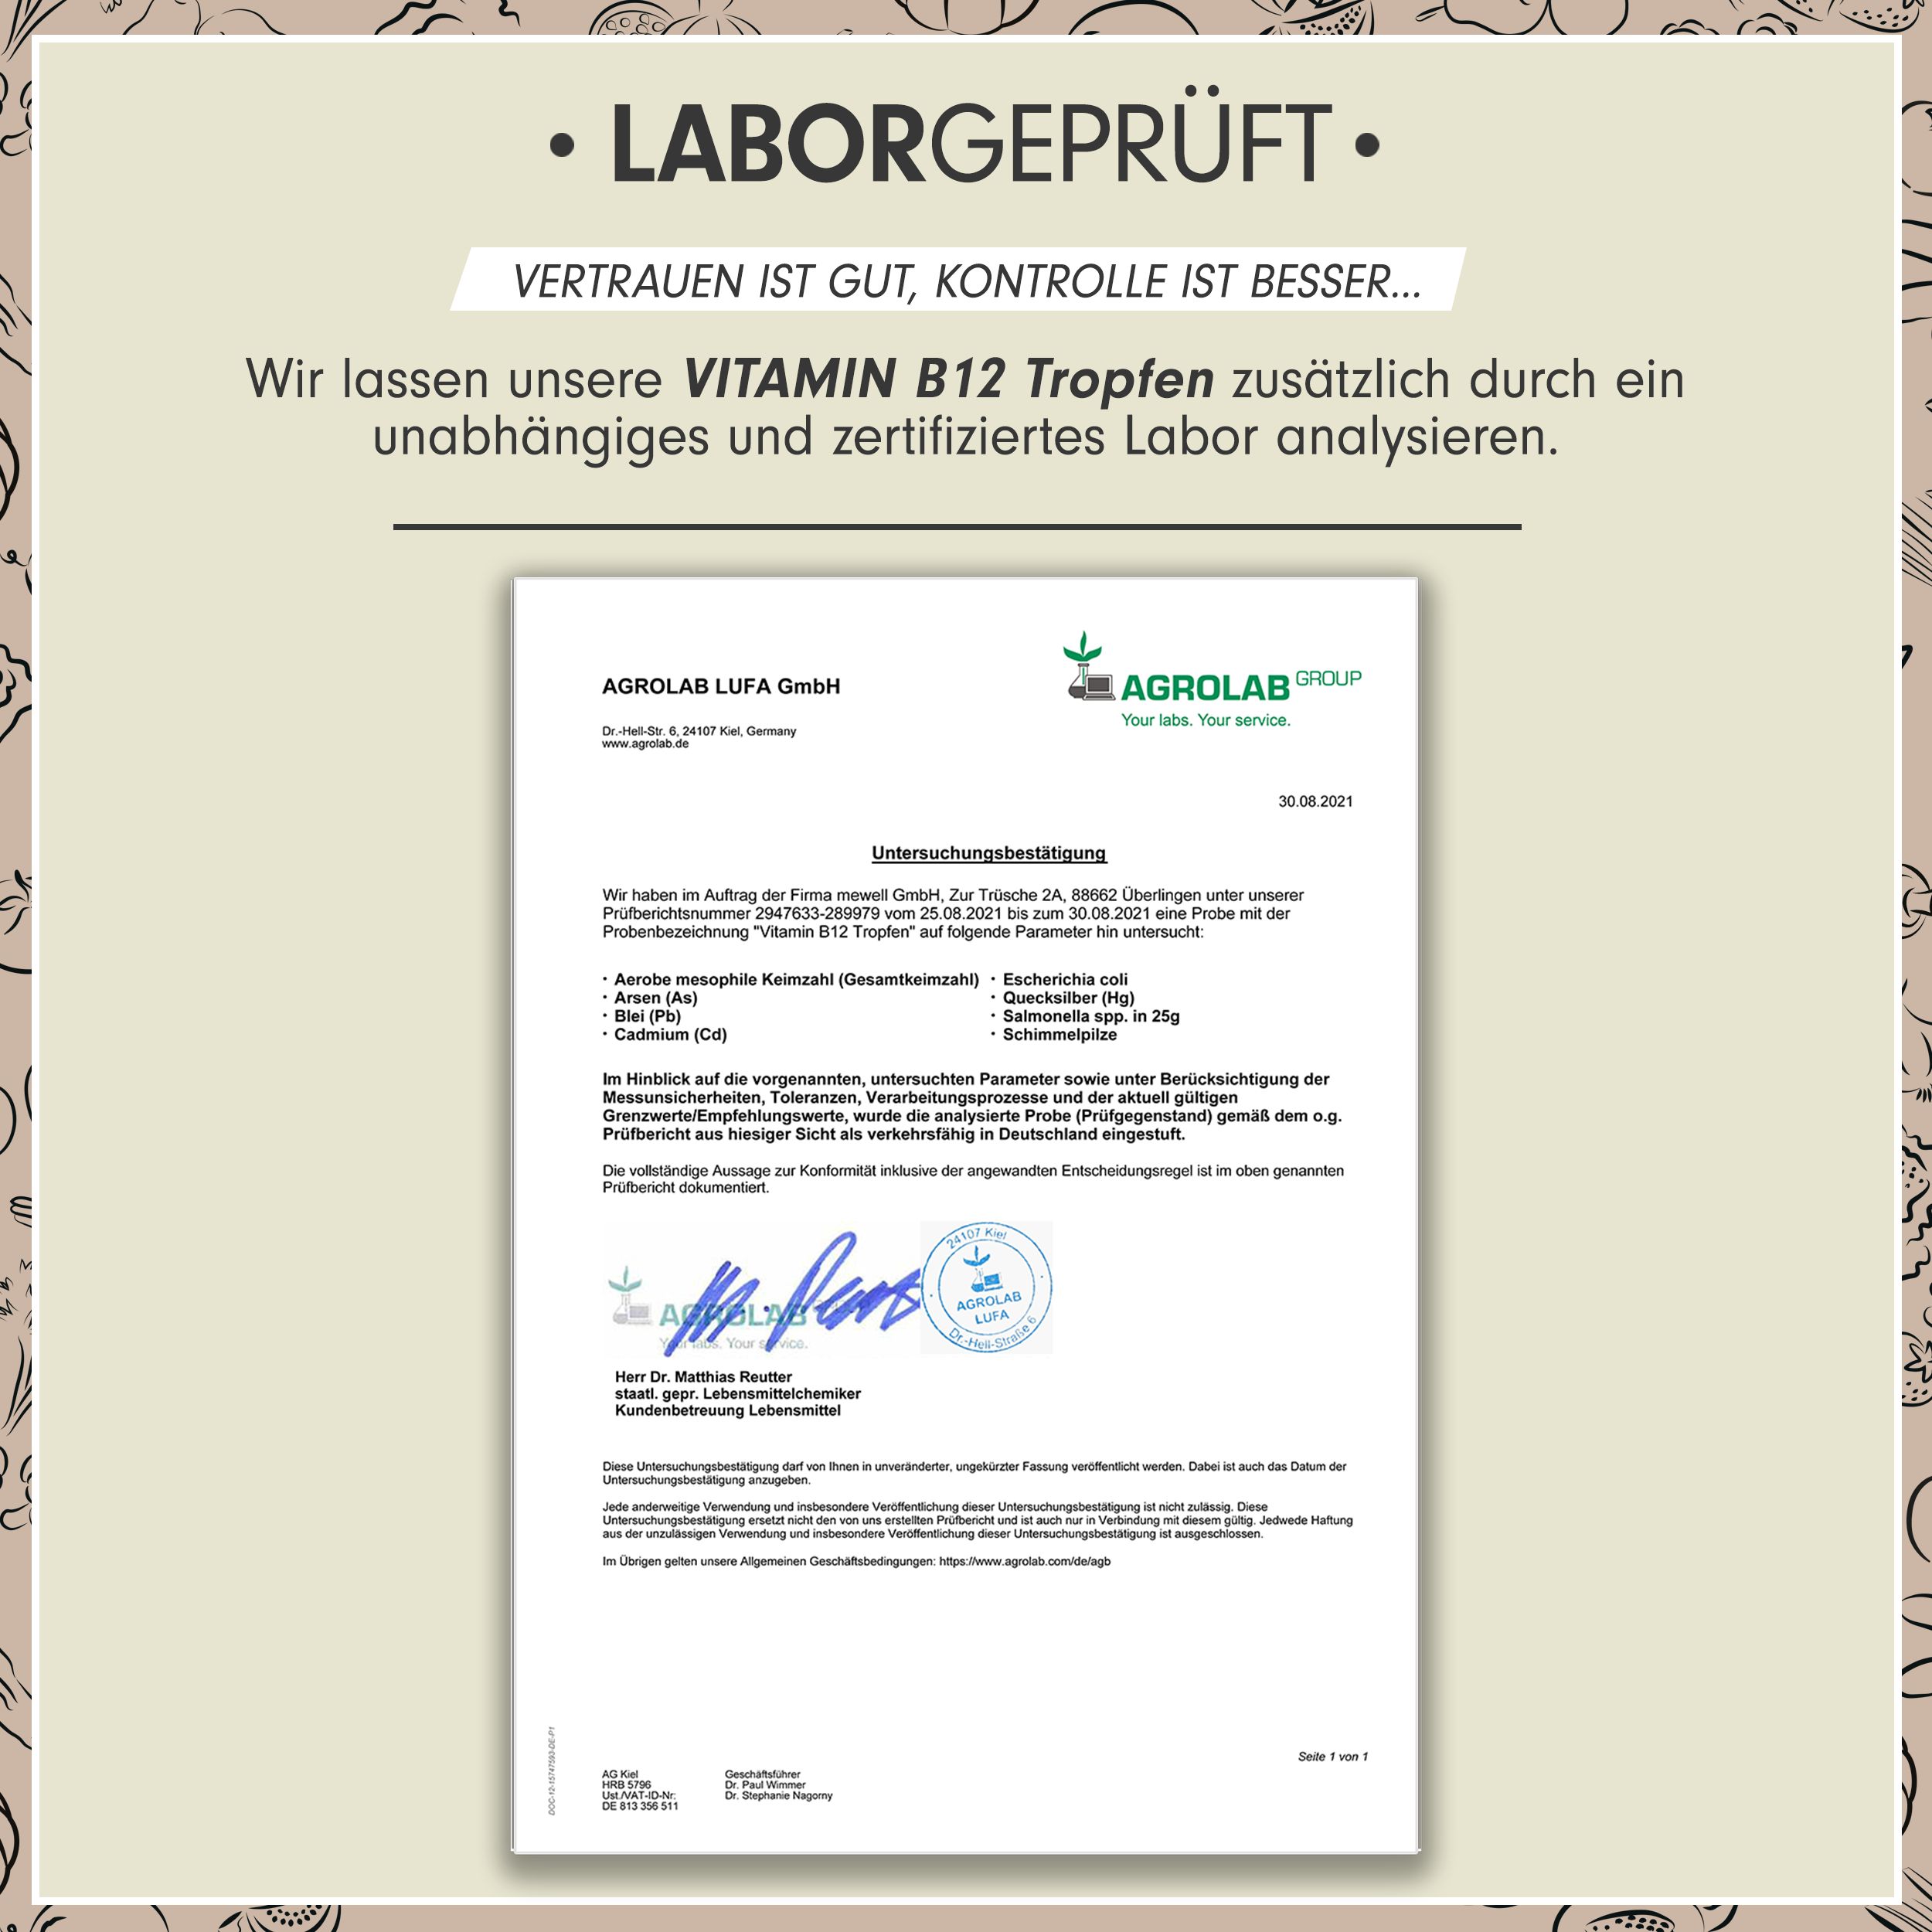 ProFuel - VITAMIN B12 Tropfen - 500 mcg bioaktives Vitamin B12 (Methylcobalamin) pro Tropfen